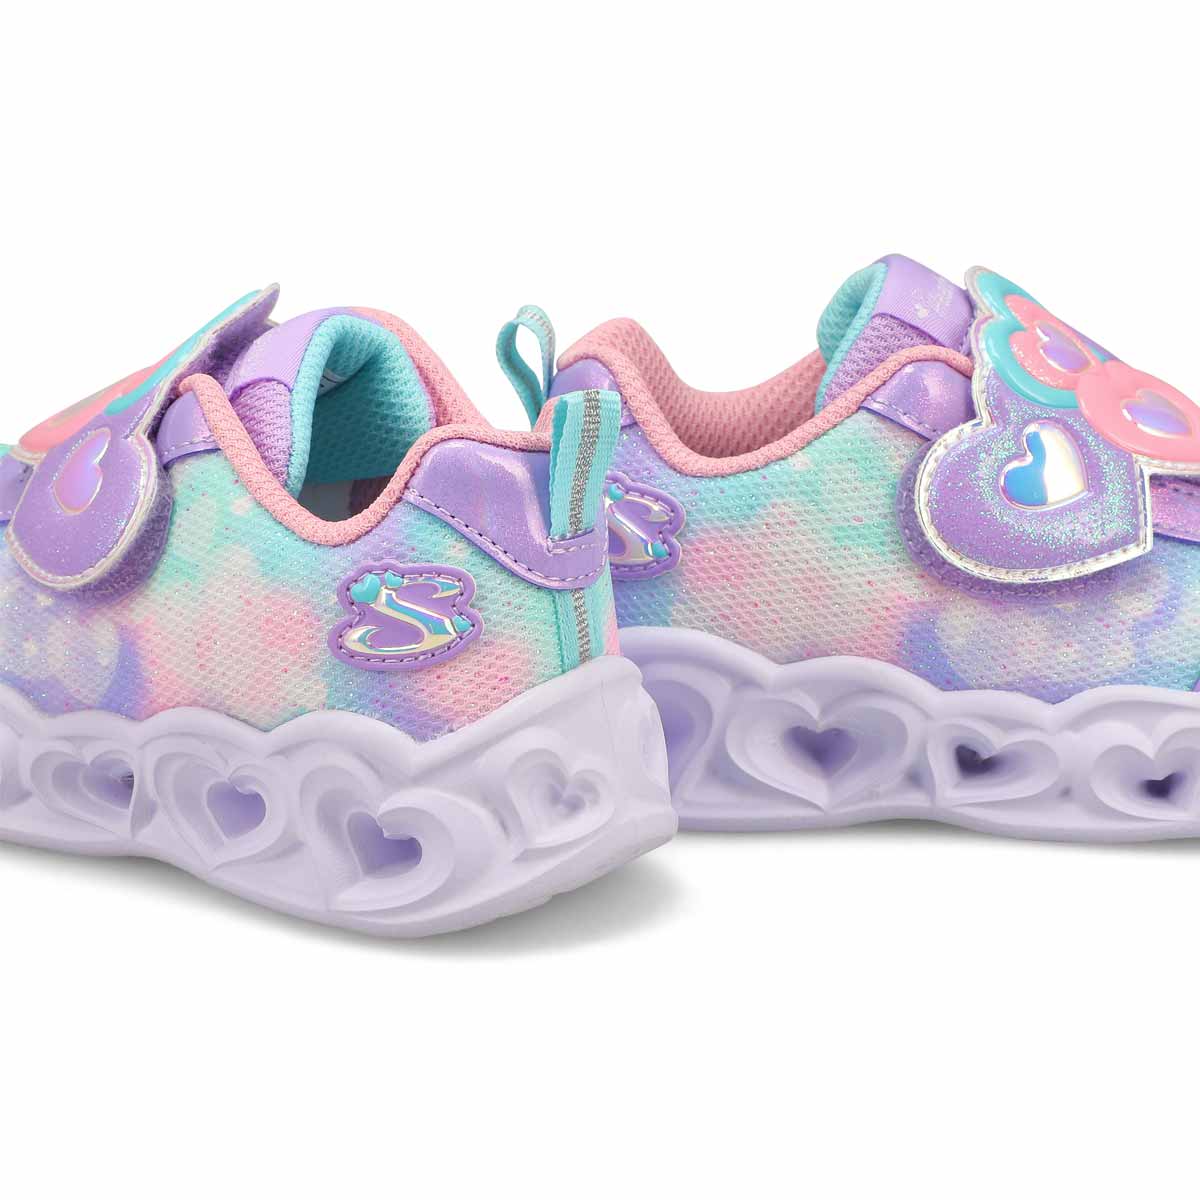 Infants' -G Heart Lights Light Up Sneaker - Lavender/Light Pink